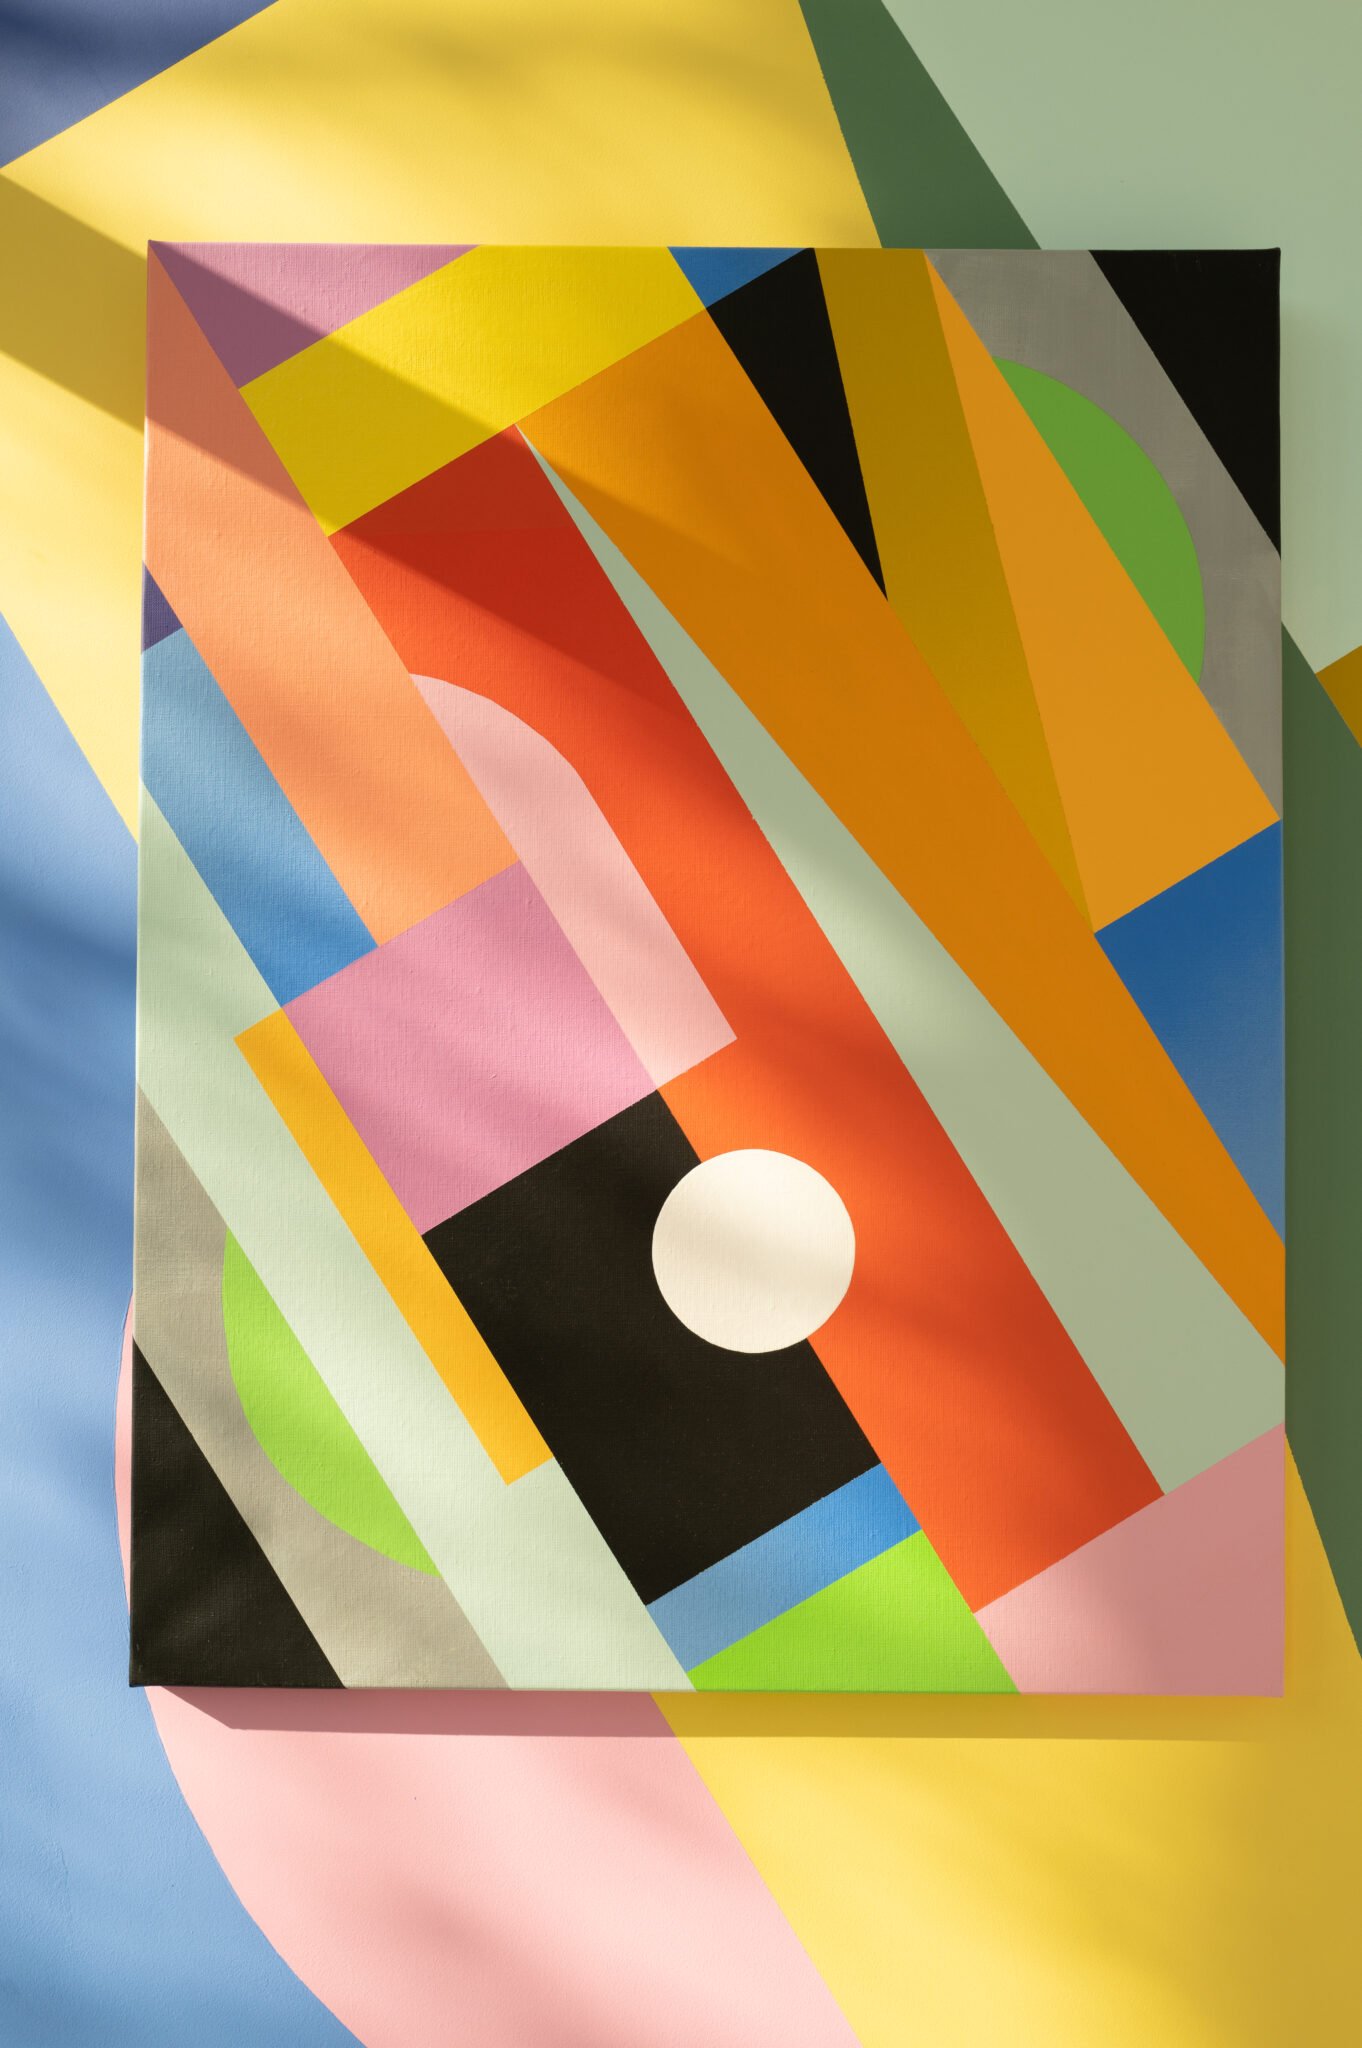 hatchikian-gallery-quai36-exposition-jumpincolors-symetrie-1-simon-poter